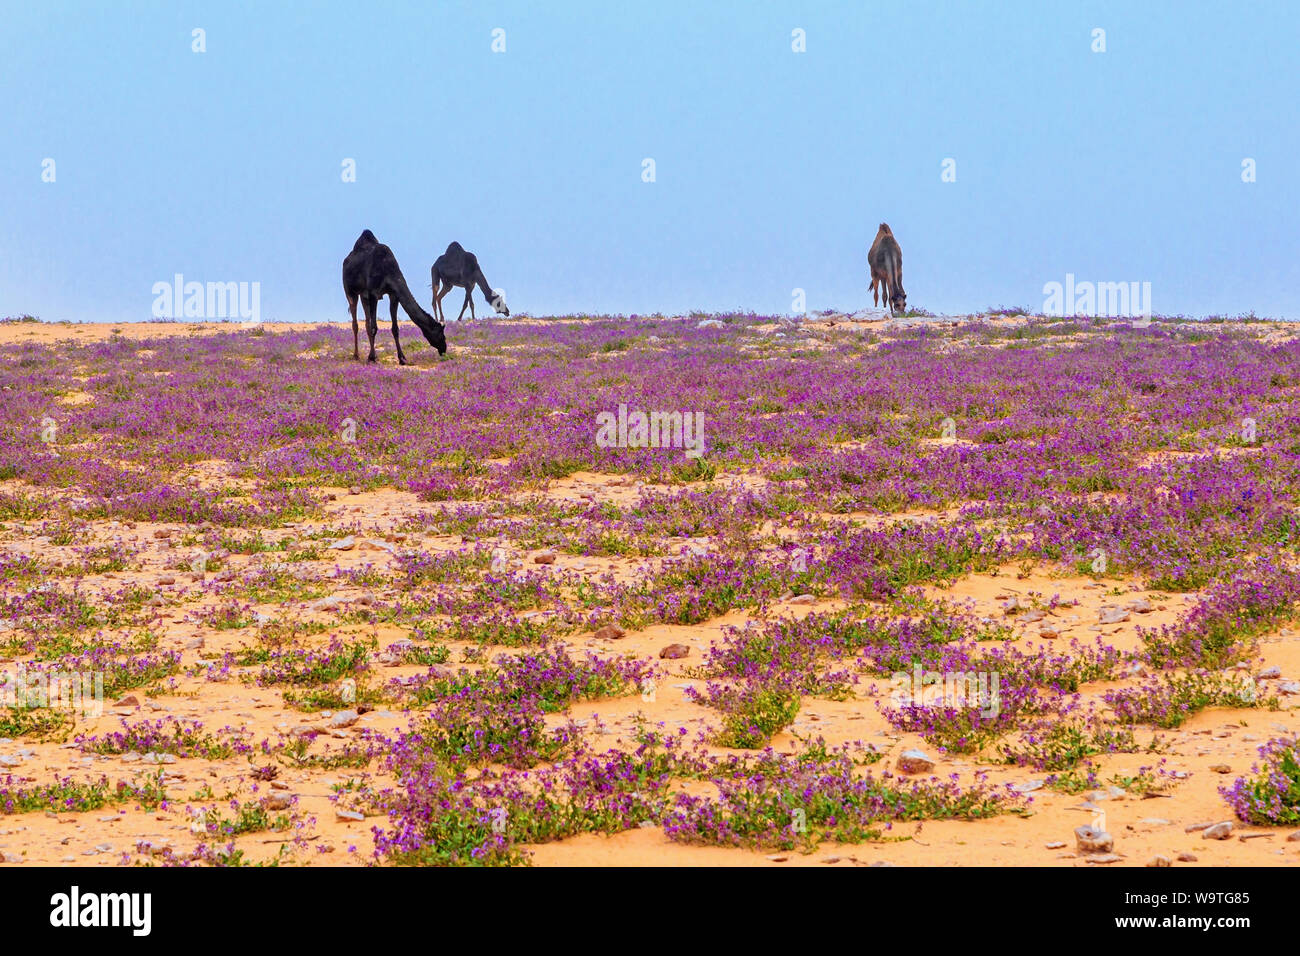 Three camels grazing in the desert, Riyadh, Saudi Arabia Stock Photo